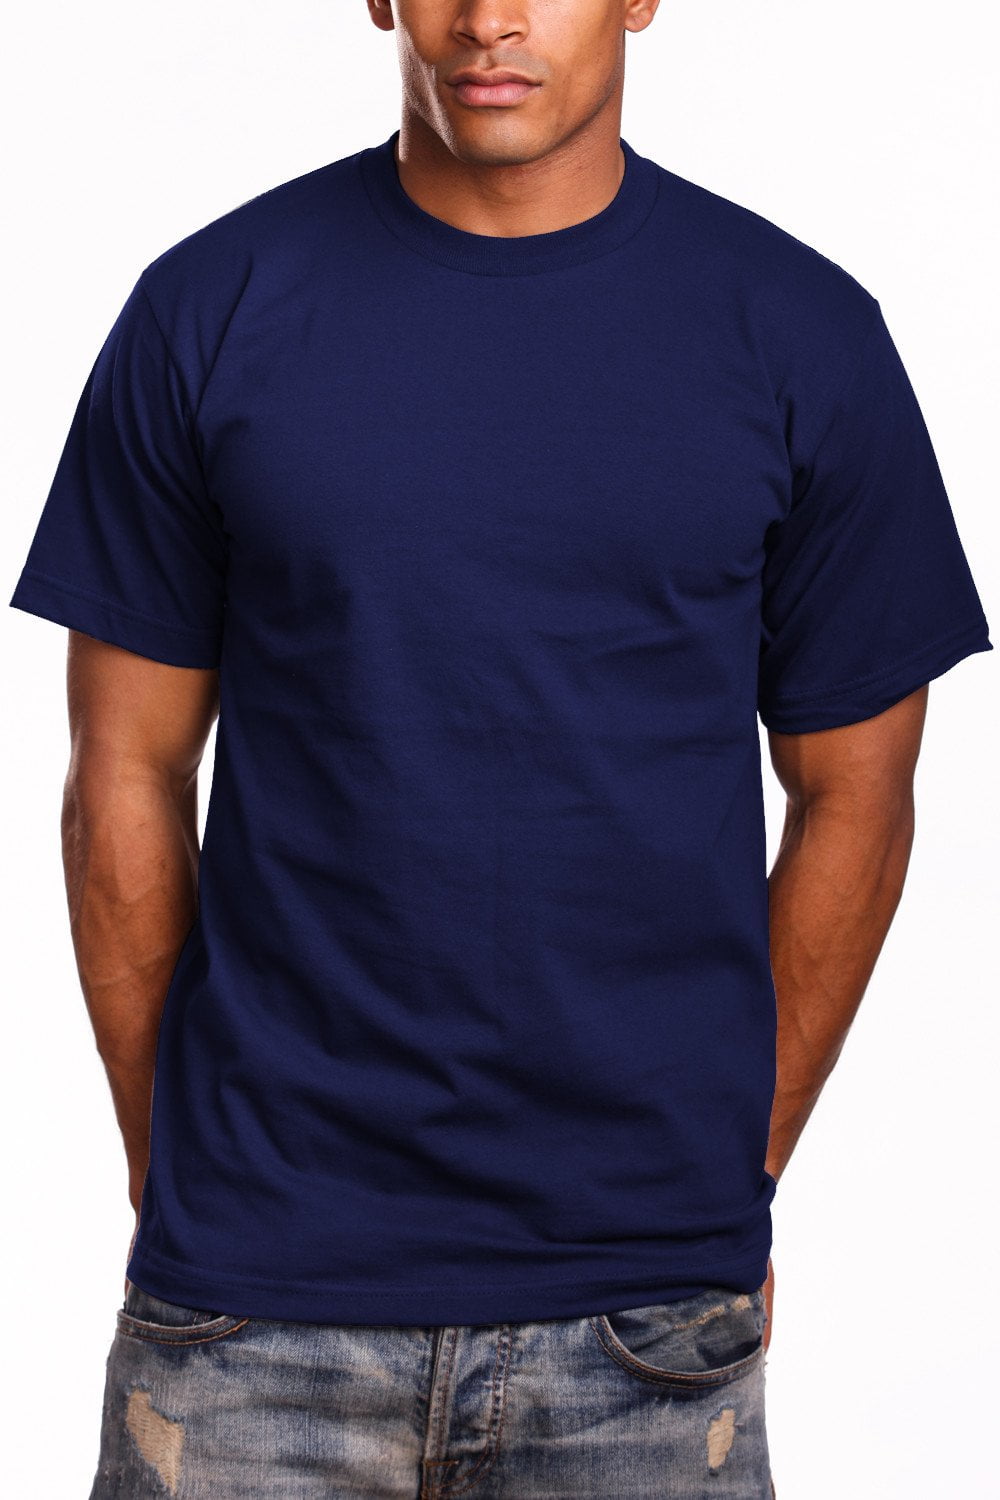 Pro 5 Superheavy T-shirt,Navy Blue,5XL Tall Walmart.com